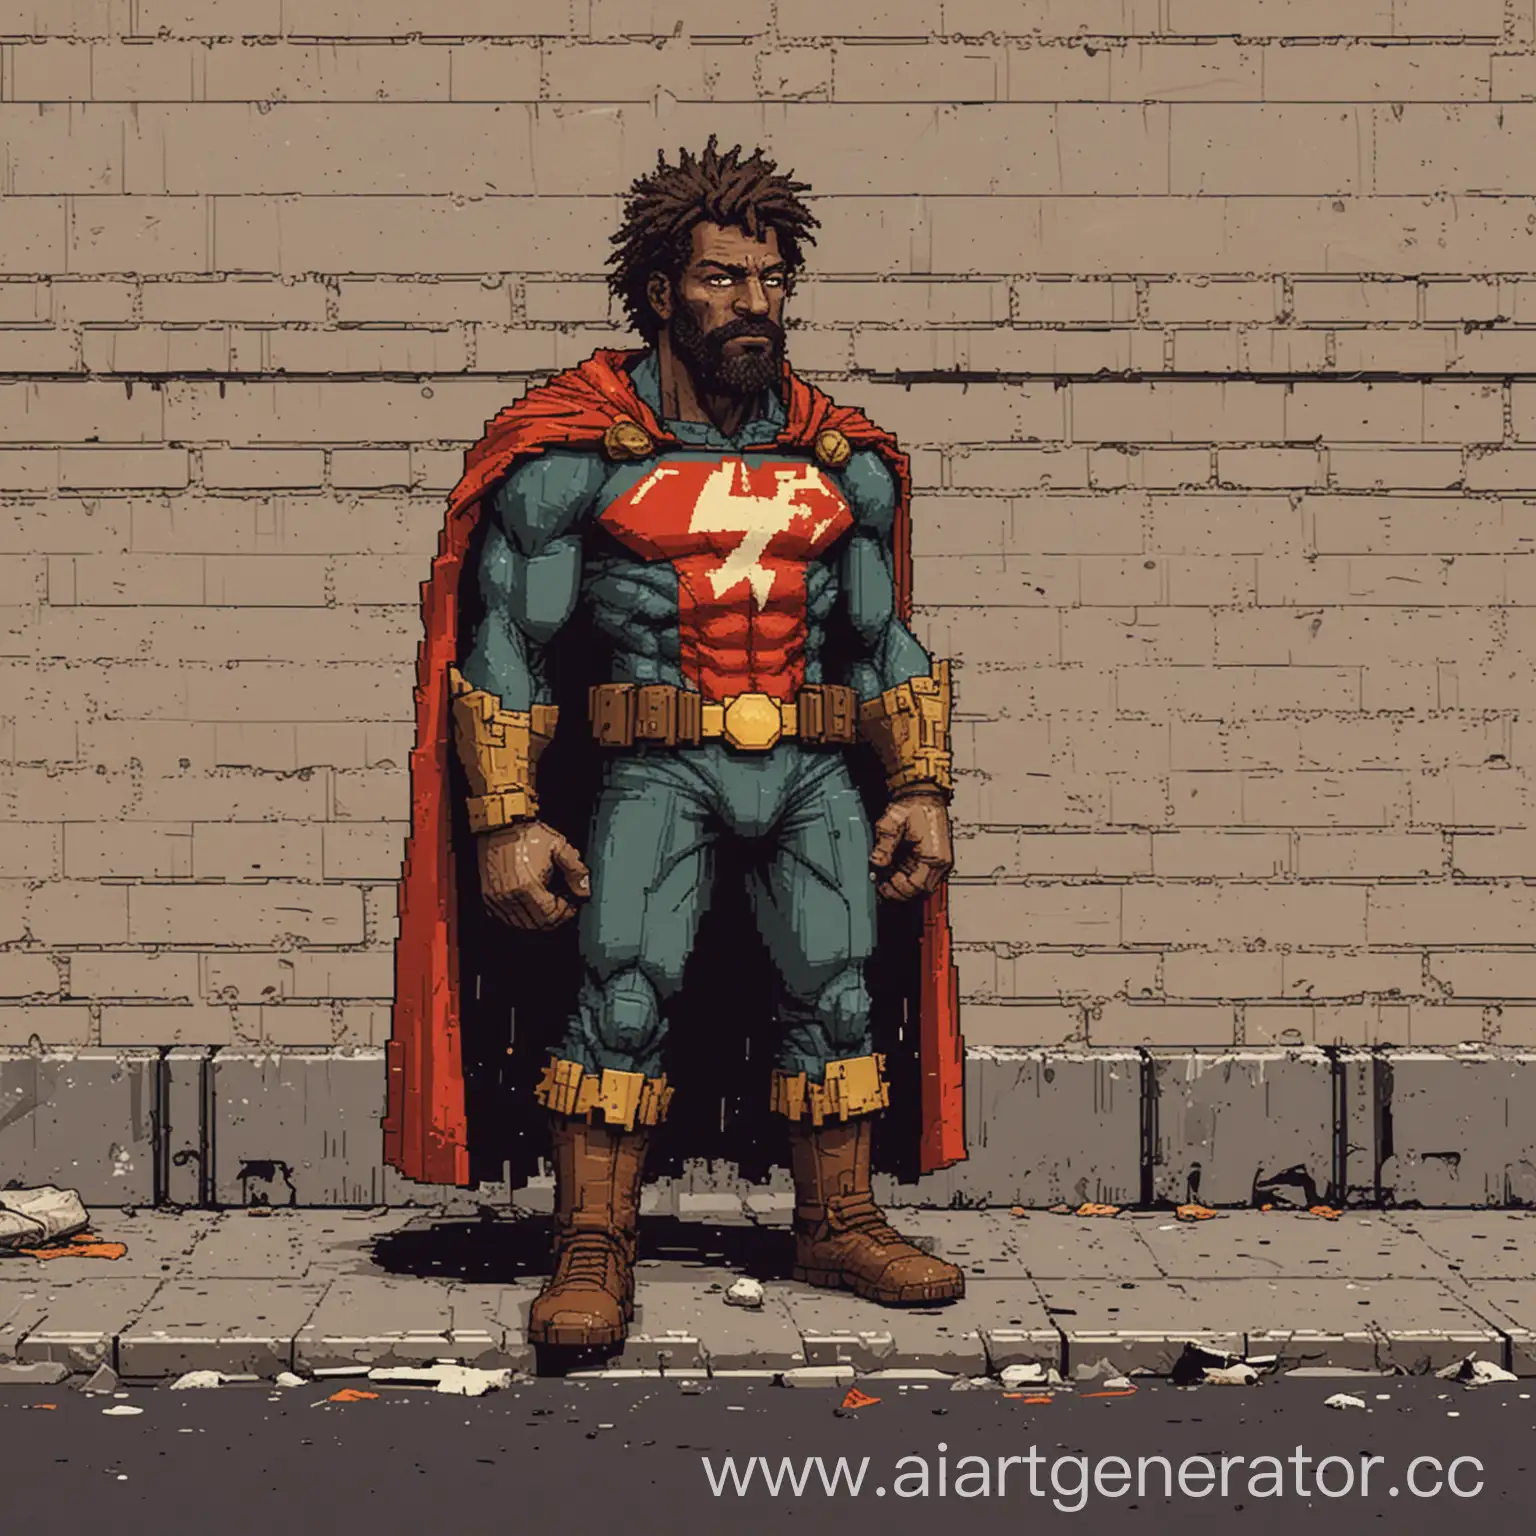 Homeless-Superhero-Pixel-Art-Courageous-Hero-in-a-Pixelated-World